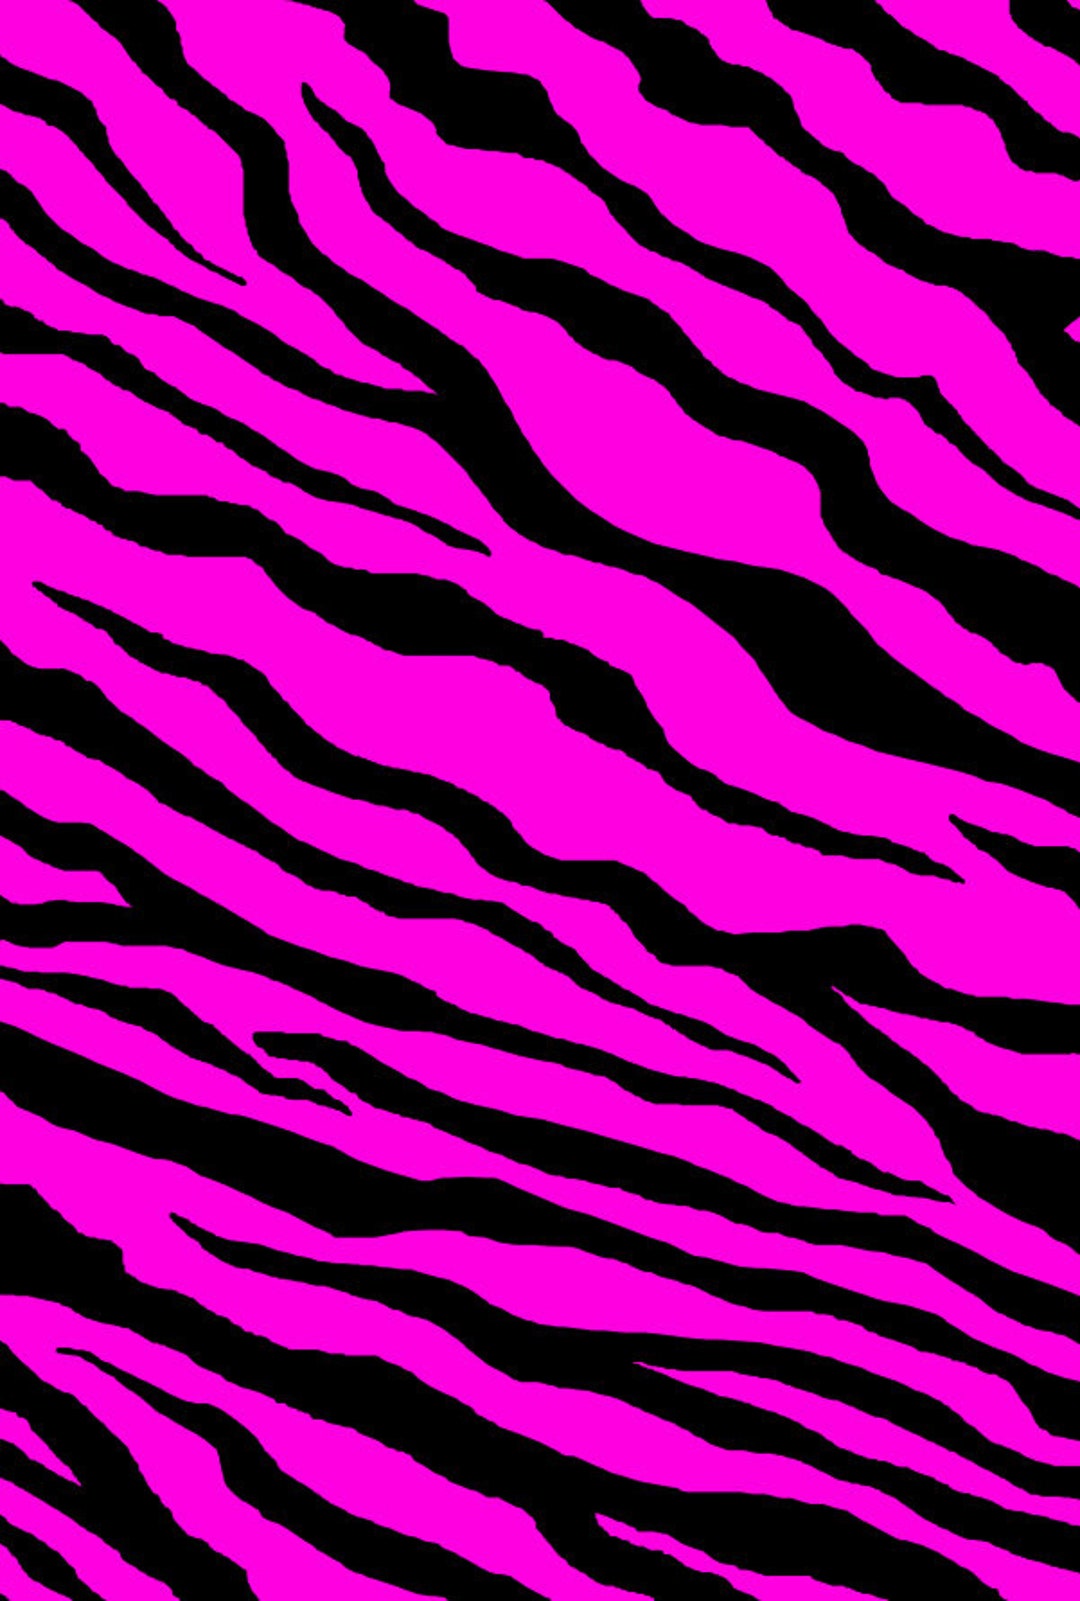 Pink Zebra Stripes Animal Skin Print Stretch Spandex Microfibr - Etsy